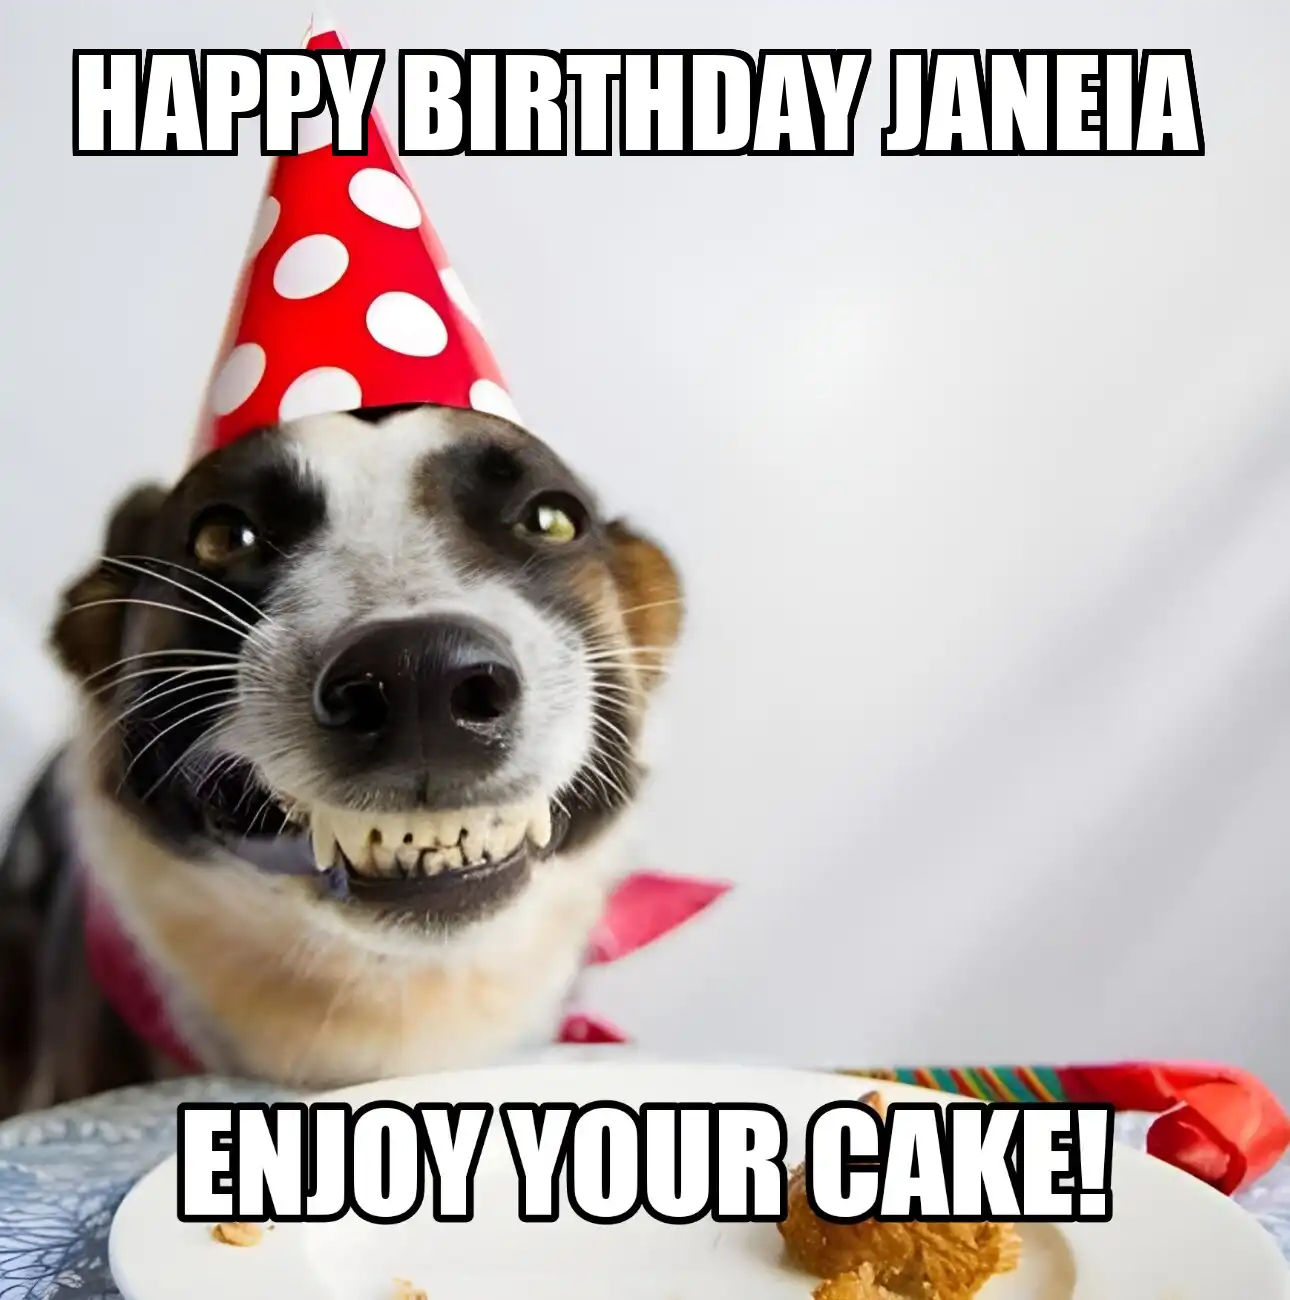 Happy Birthday Janeia Enjoy Your Cake Dog Meme